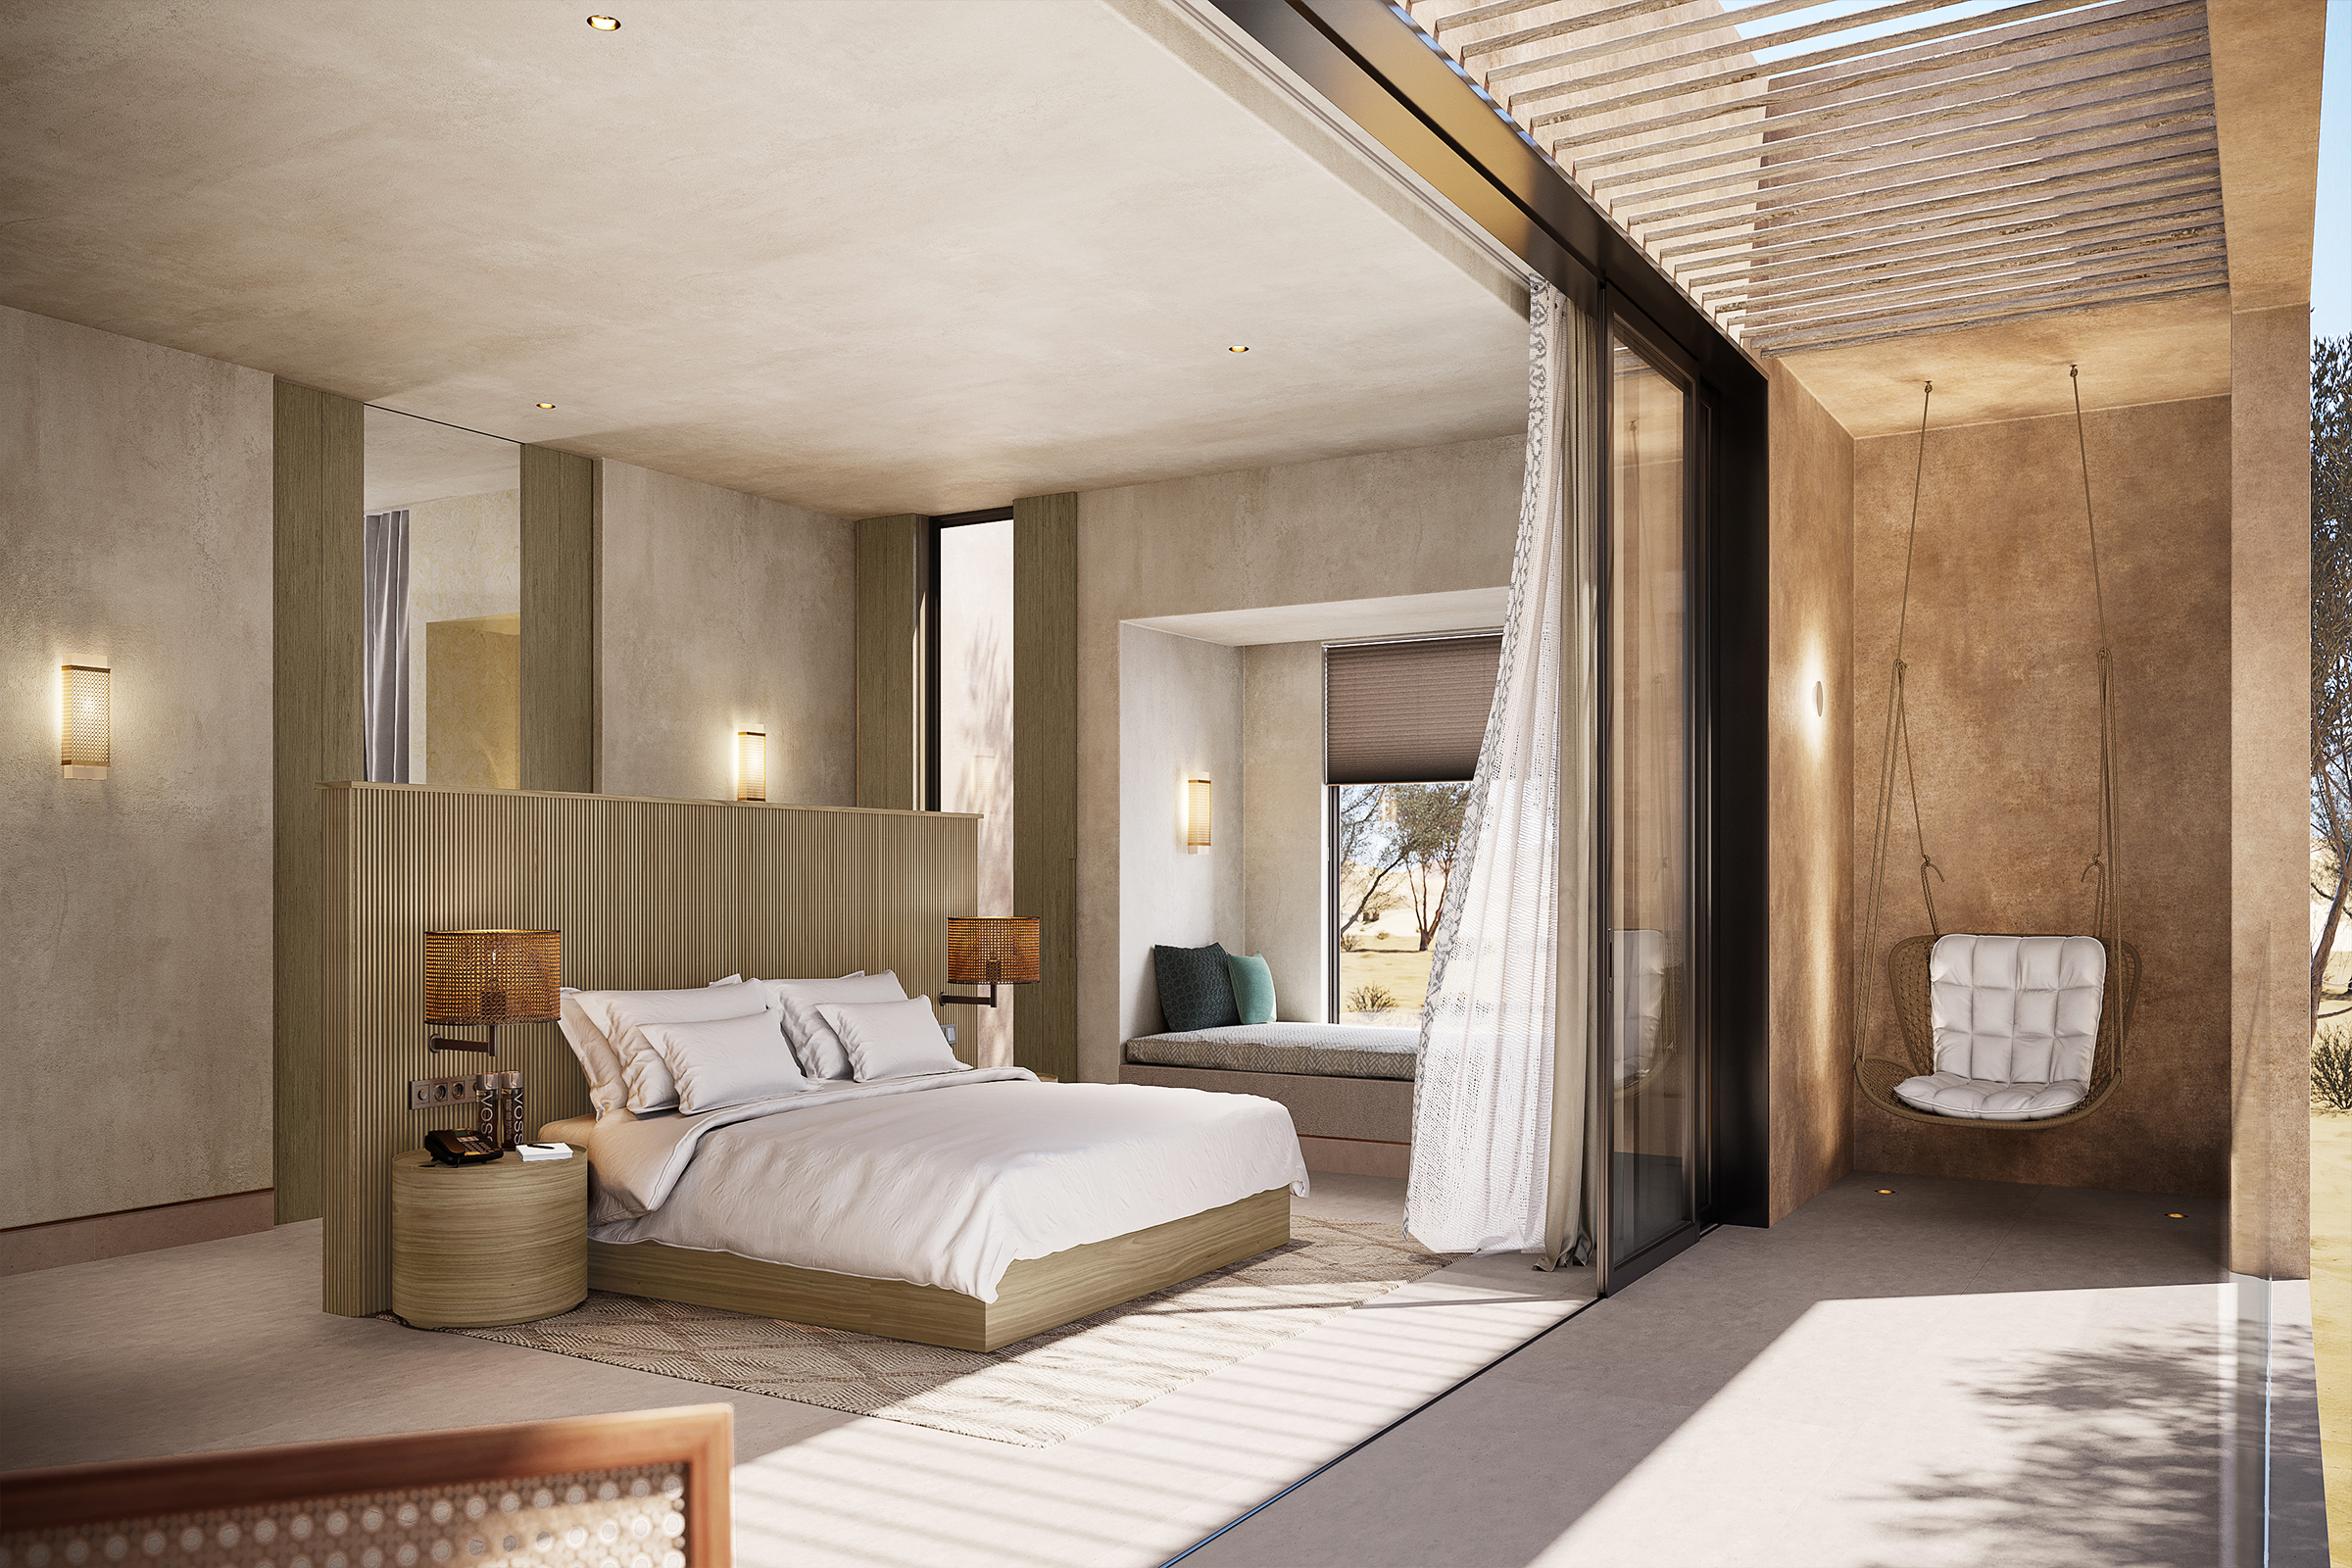 Desert-views luxury villa in five-star Ras Al Khaimah hotel resort